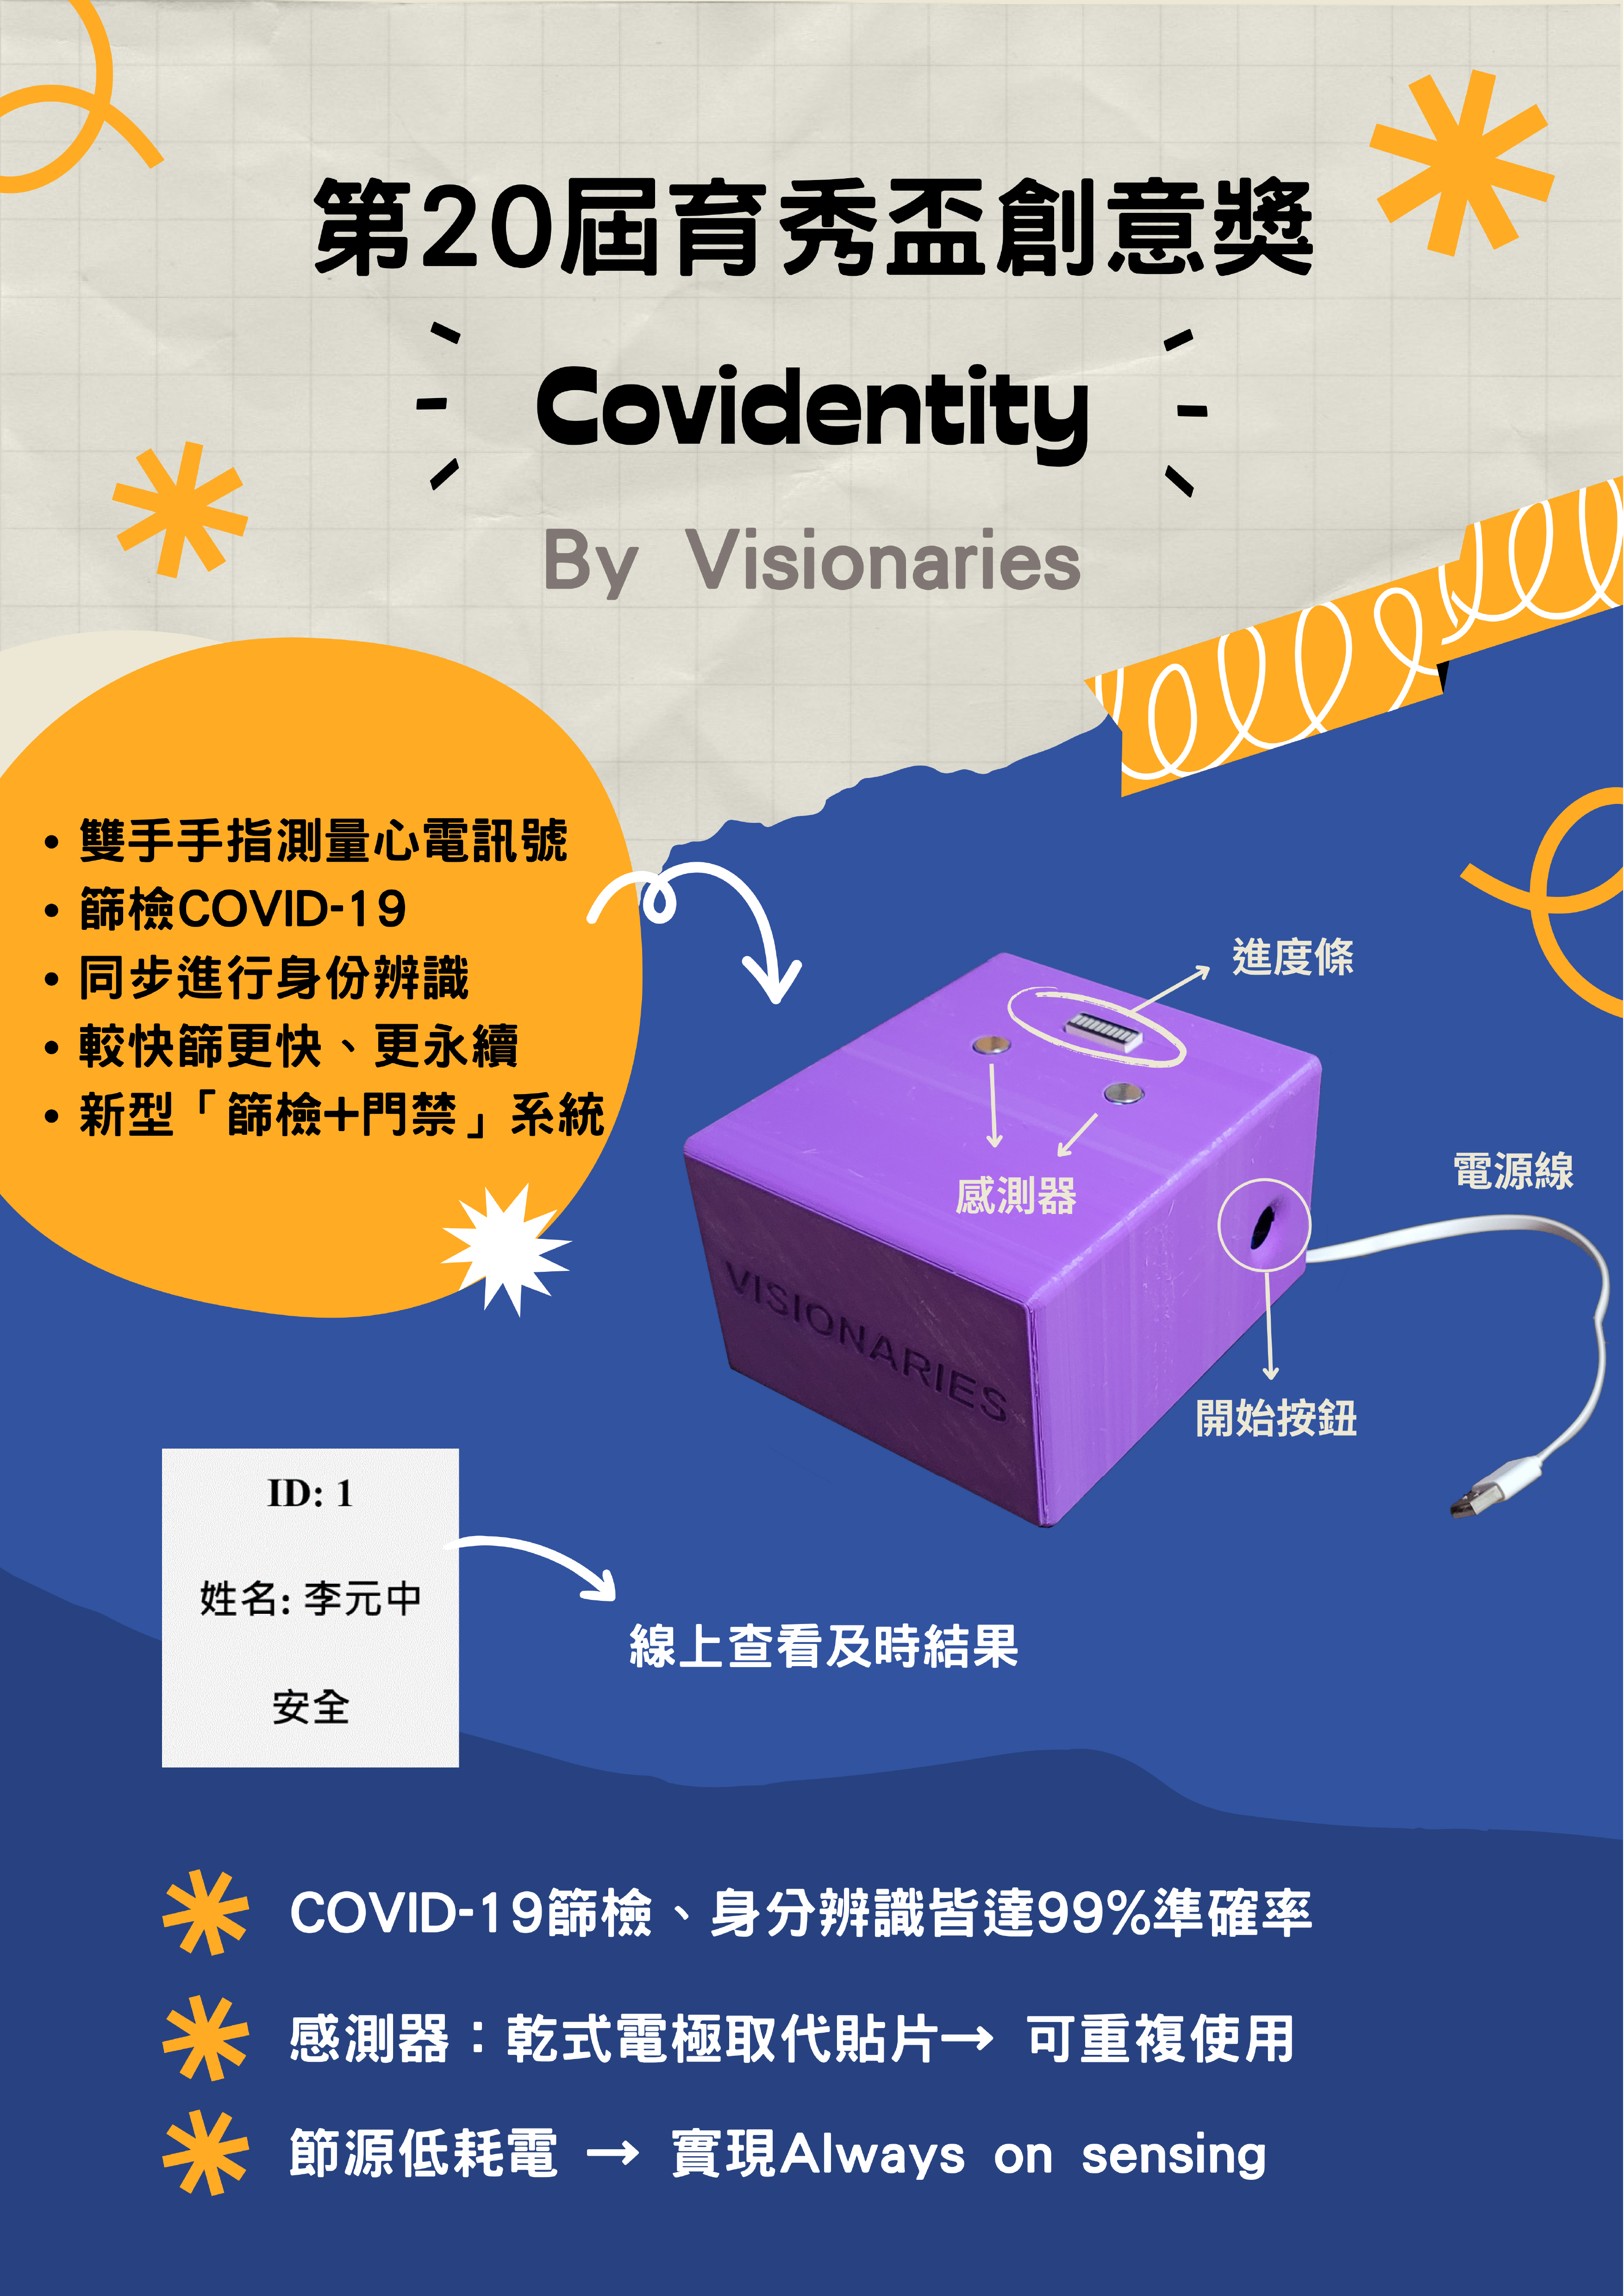 COVIDENTITY -- 新型冠狀病毒篩檢X身分辨識X深度學習